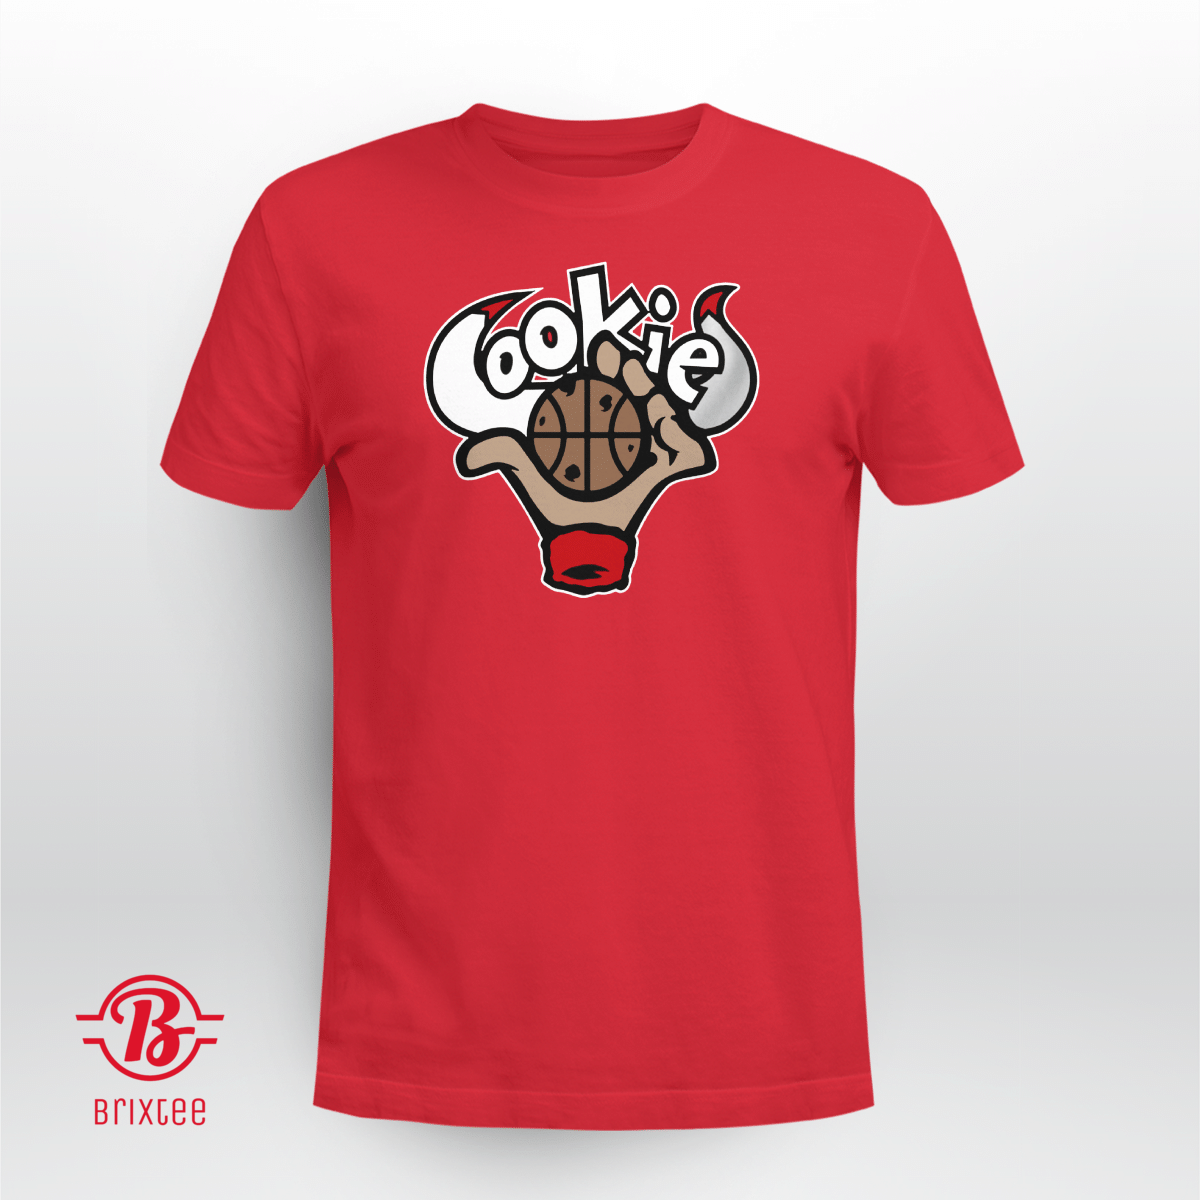 Chicago Cookies - Chicago Bulls